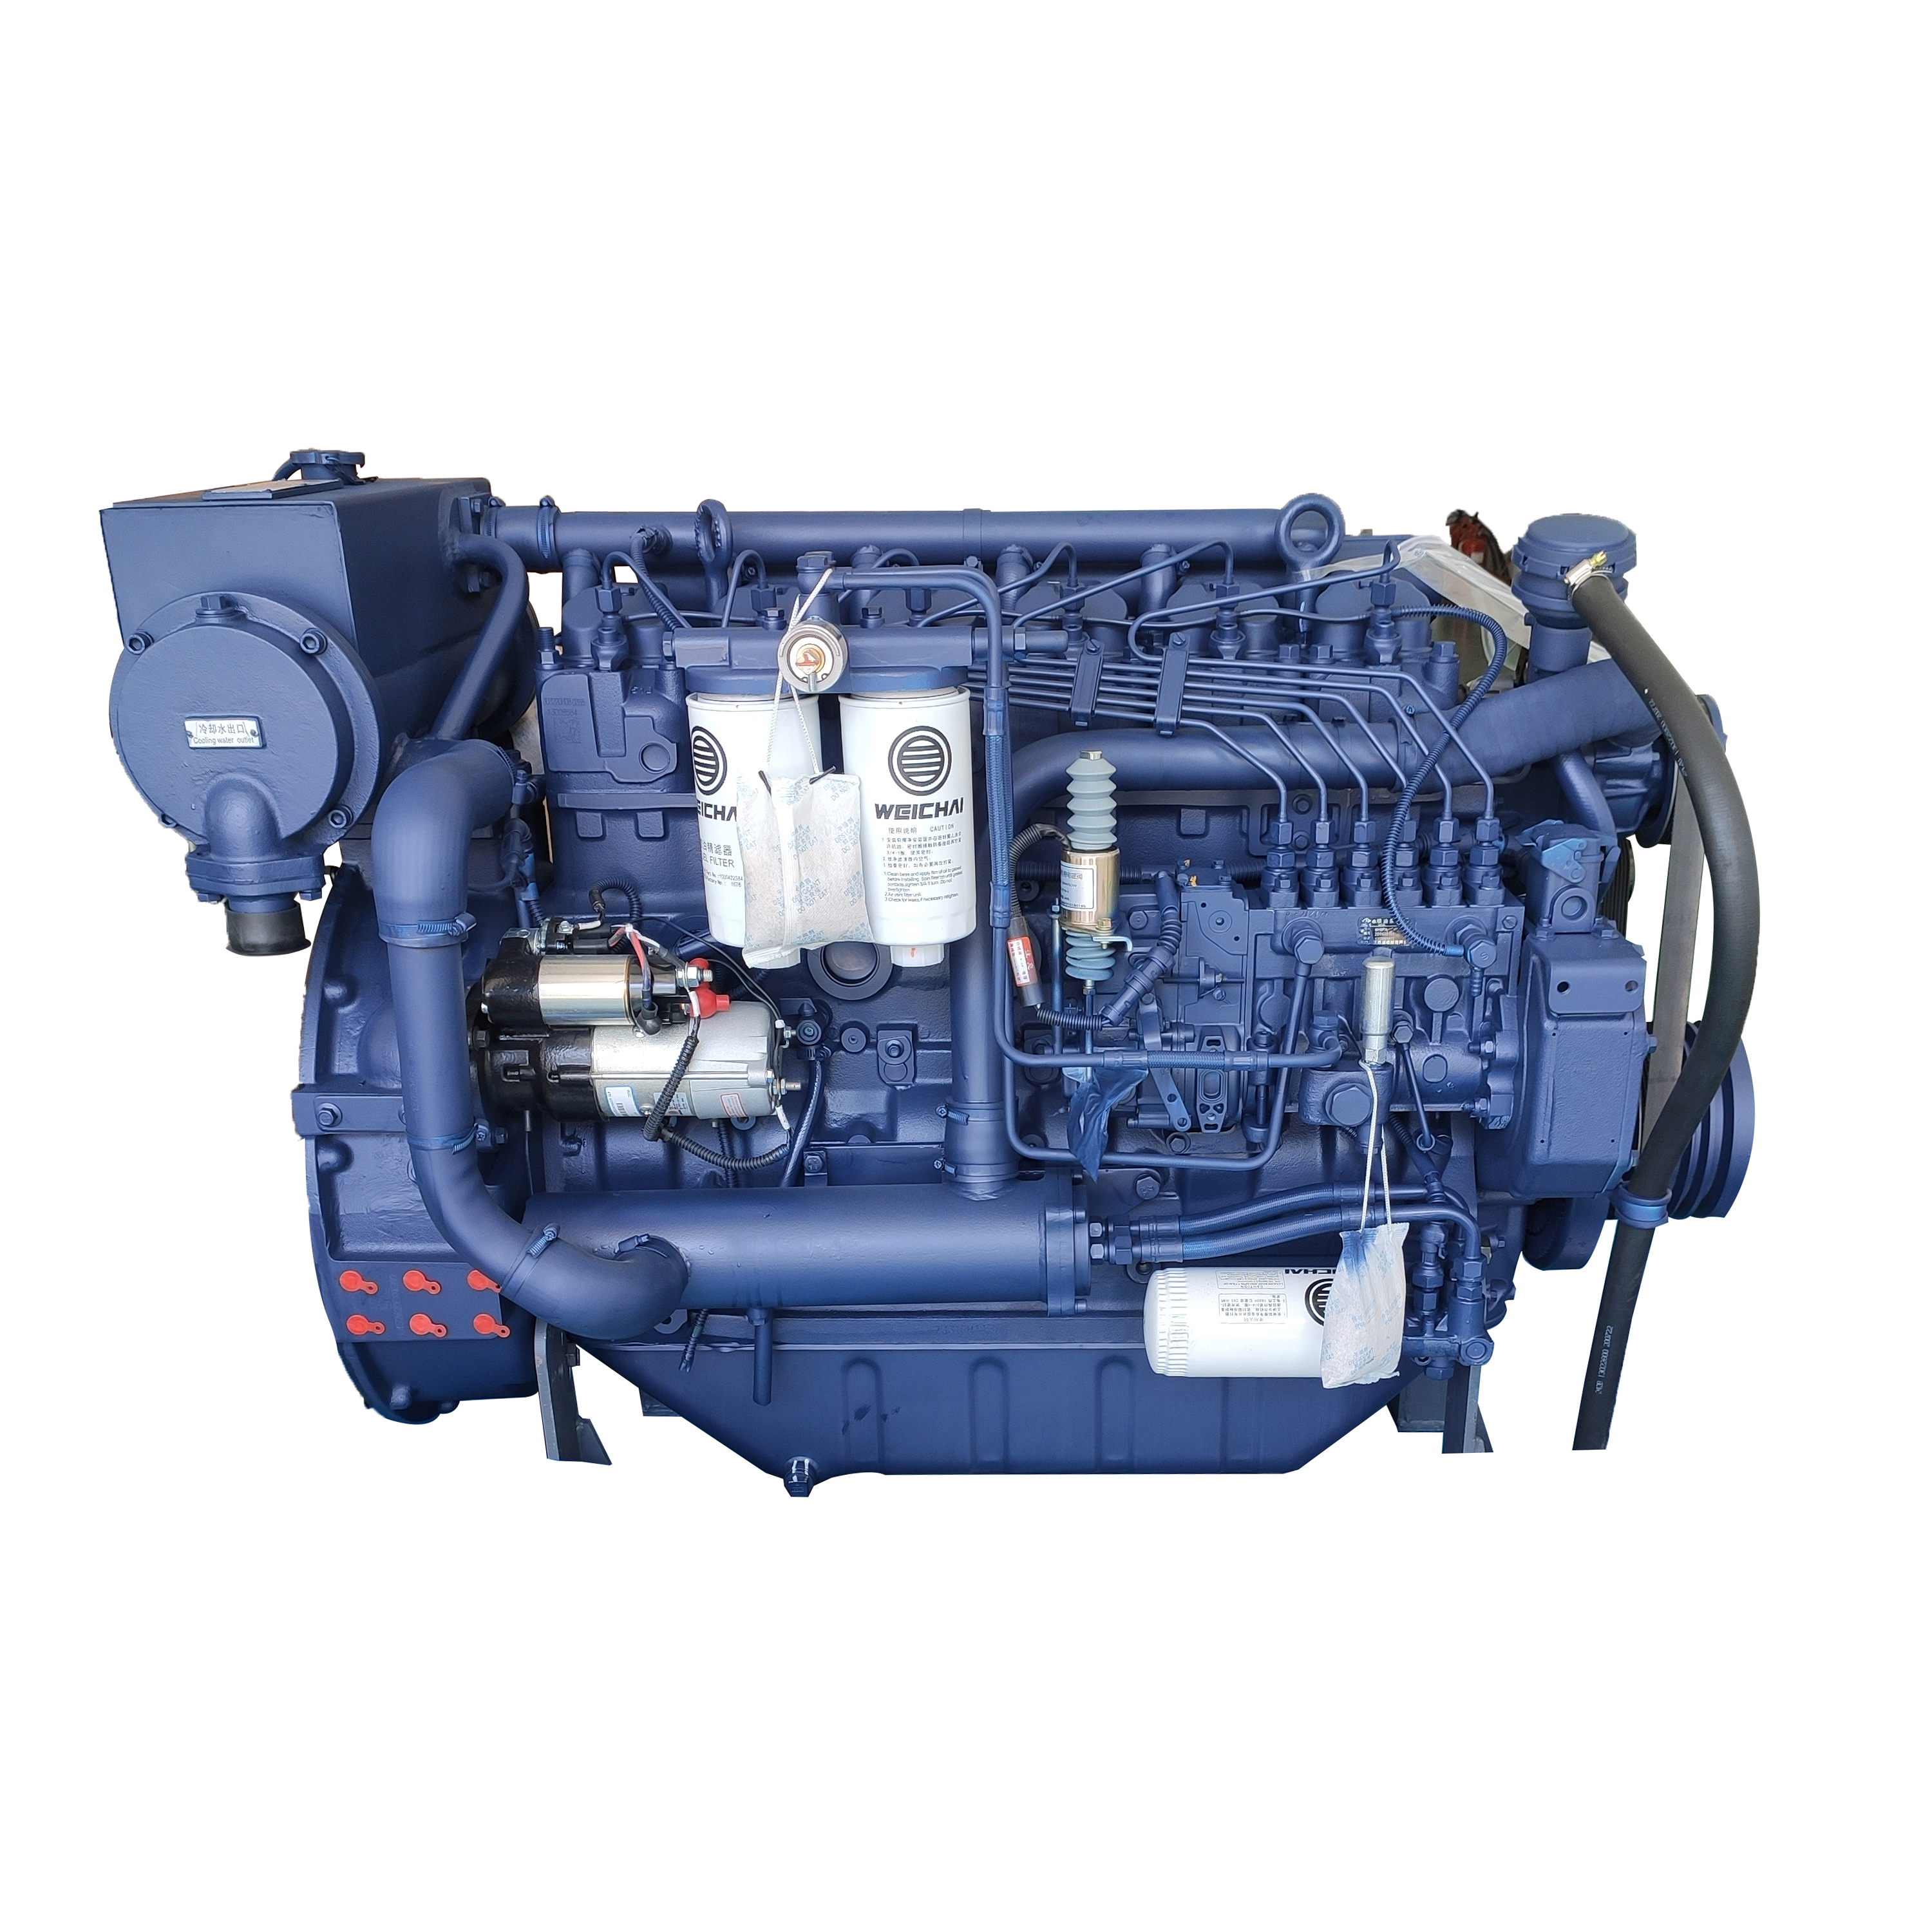 Weichai Marine Propulsion Engine WP6C156-21 and spare parts 